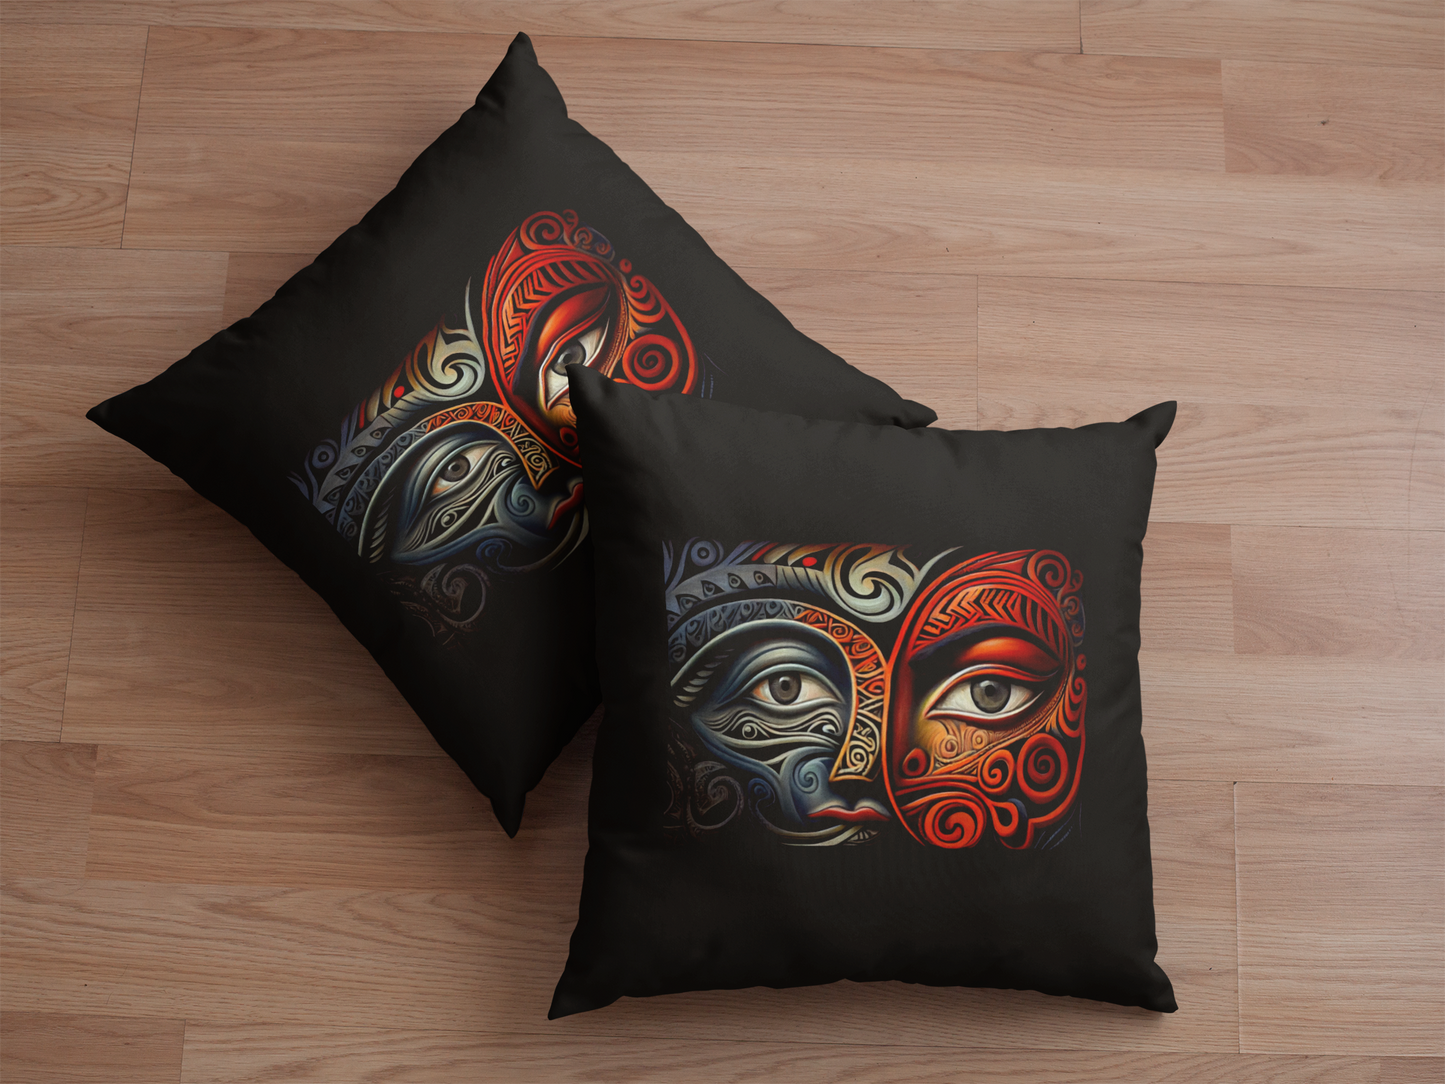 Cushion Cover - Kanohi ki te Kanohi (eye to eye) (face to face)